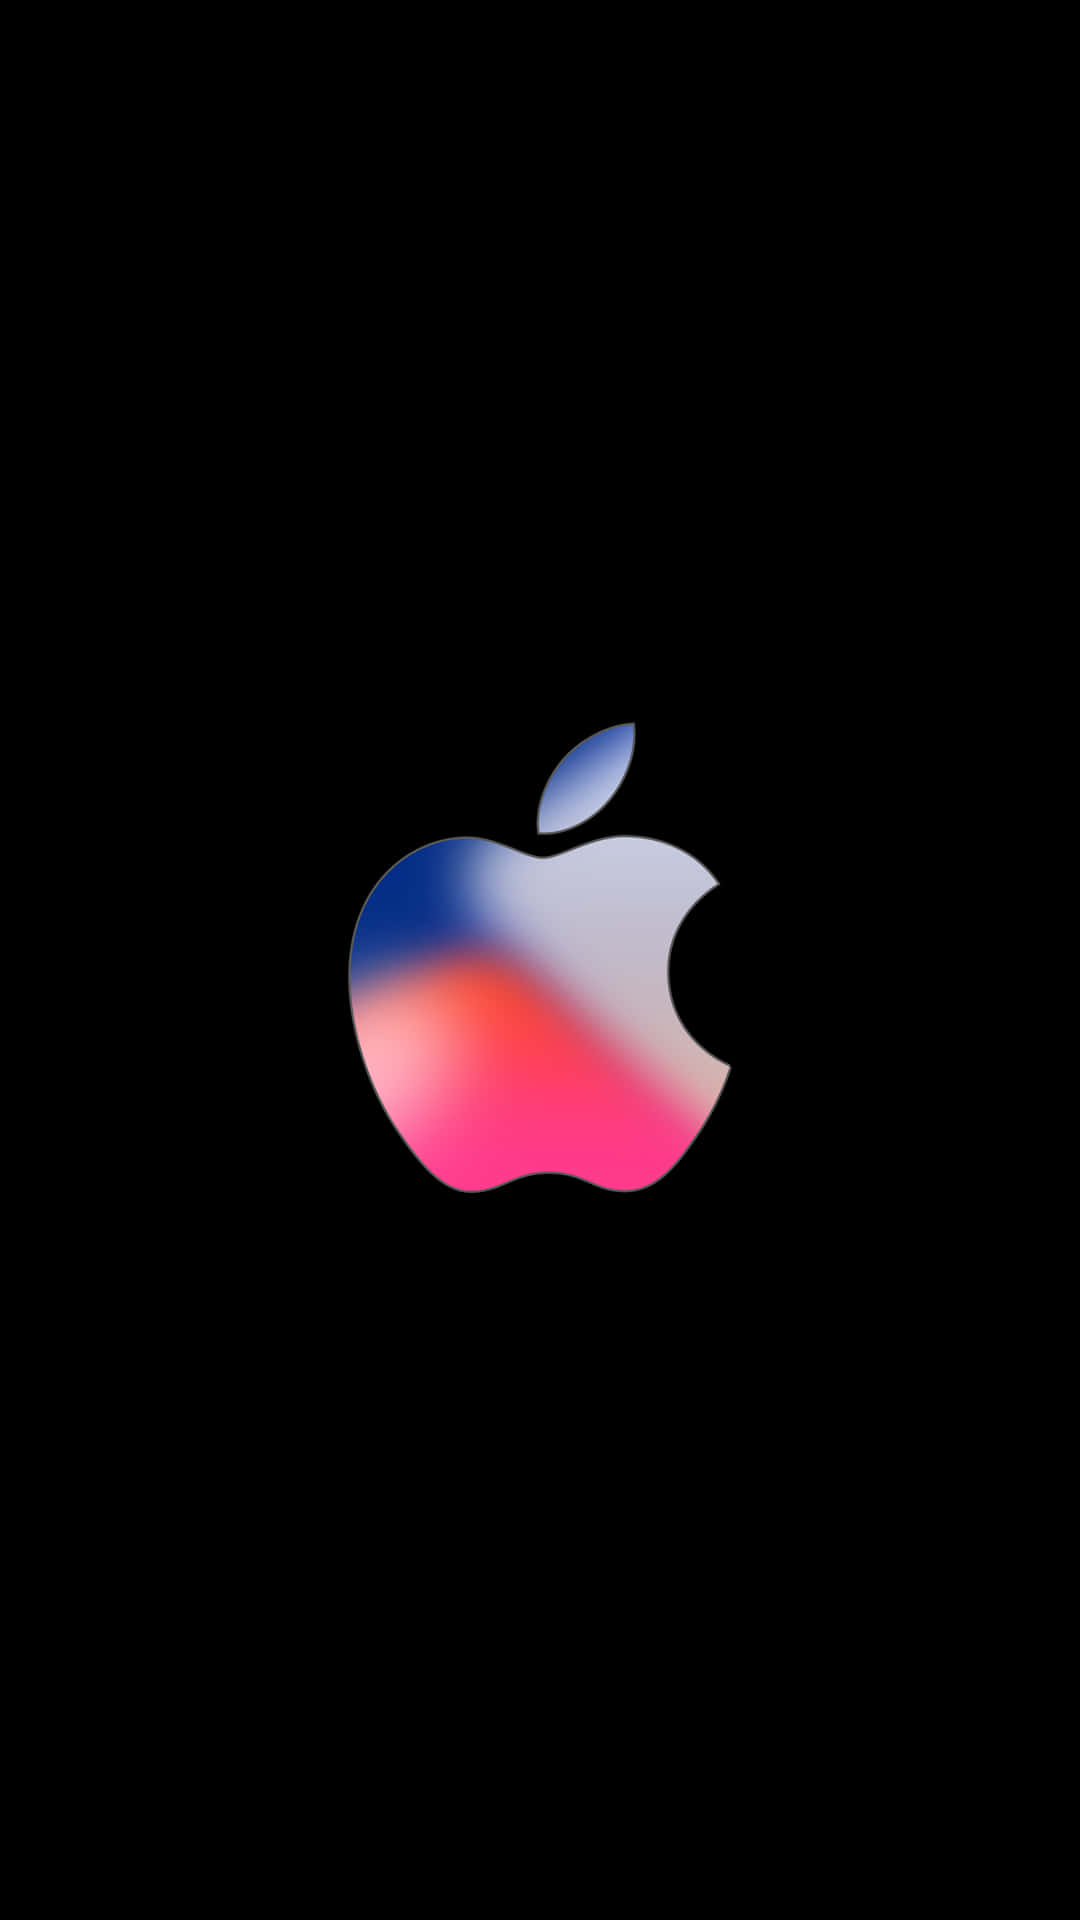 Apple Logo On A Black Background Background